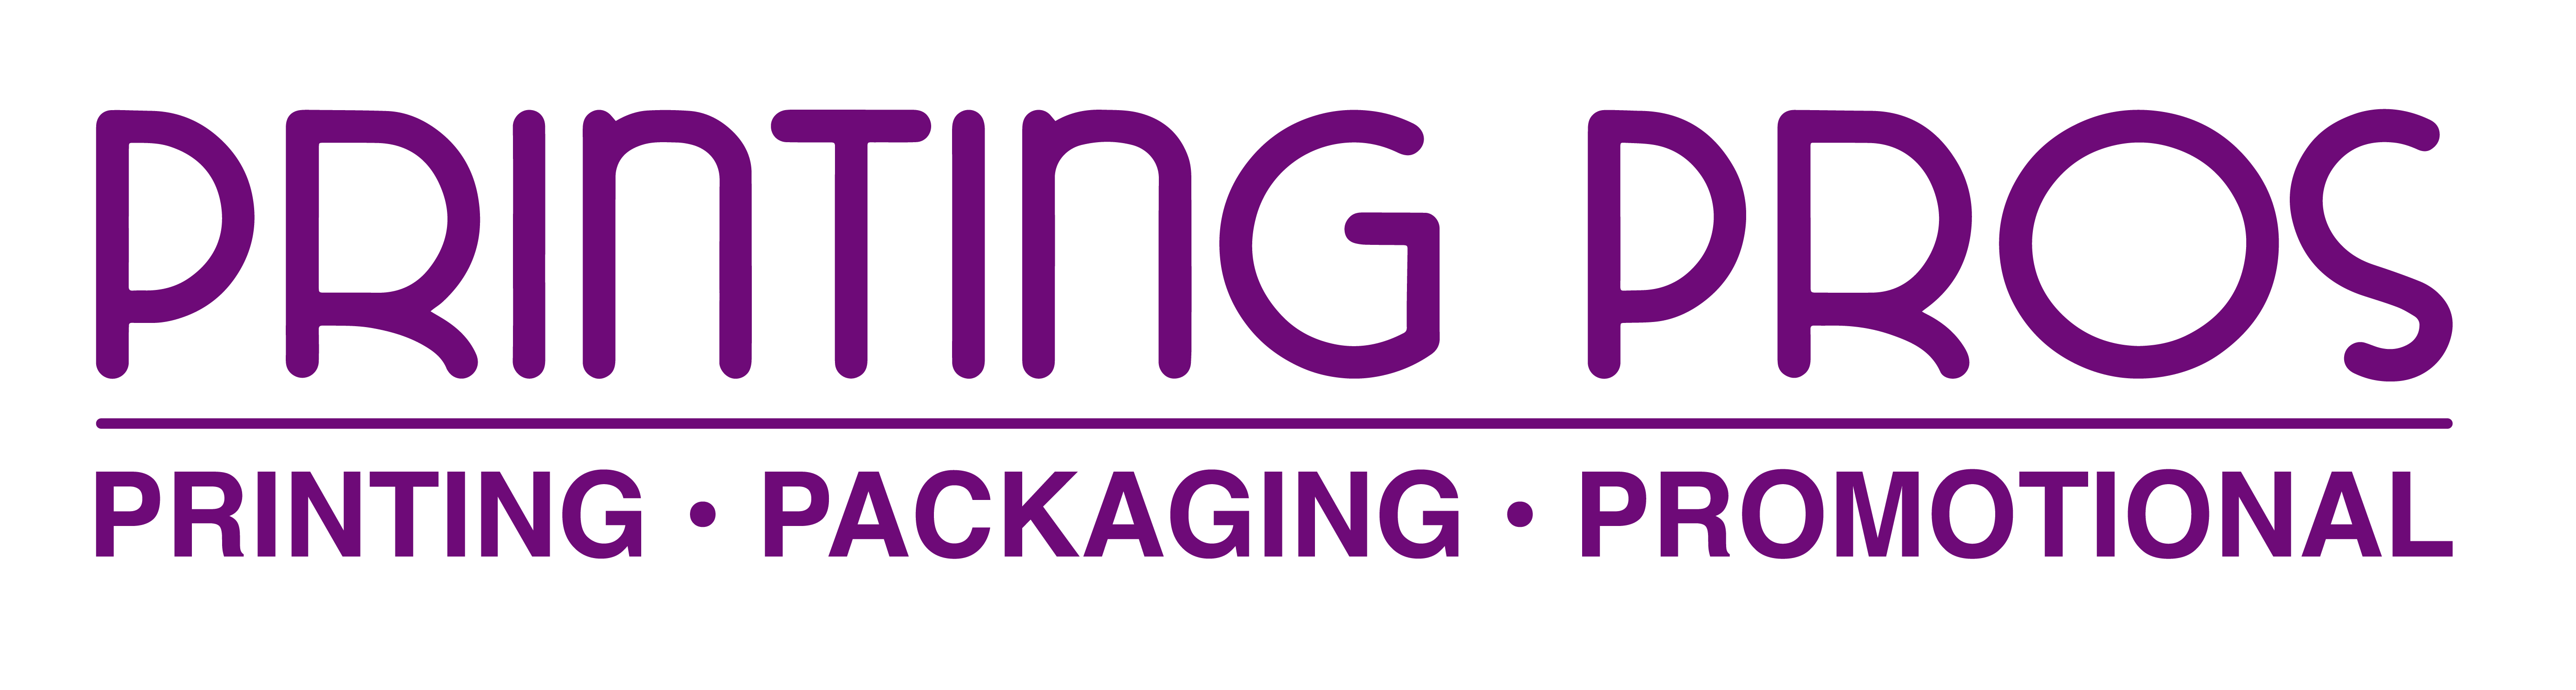 Printing Pros's Logo